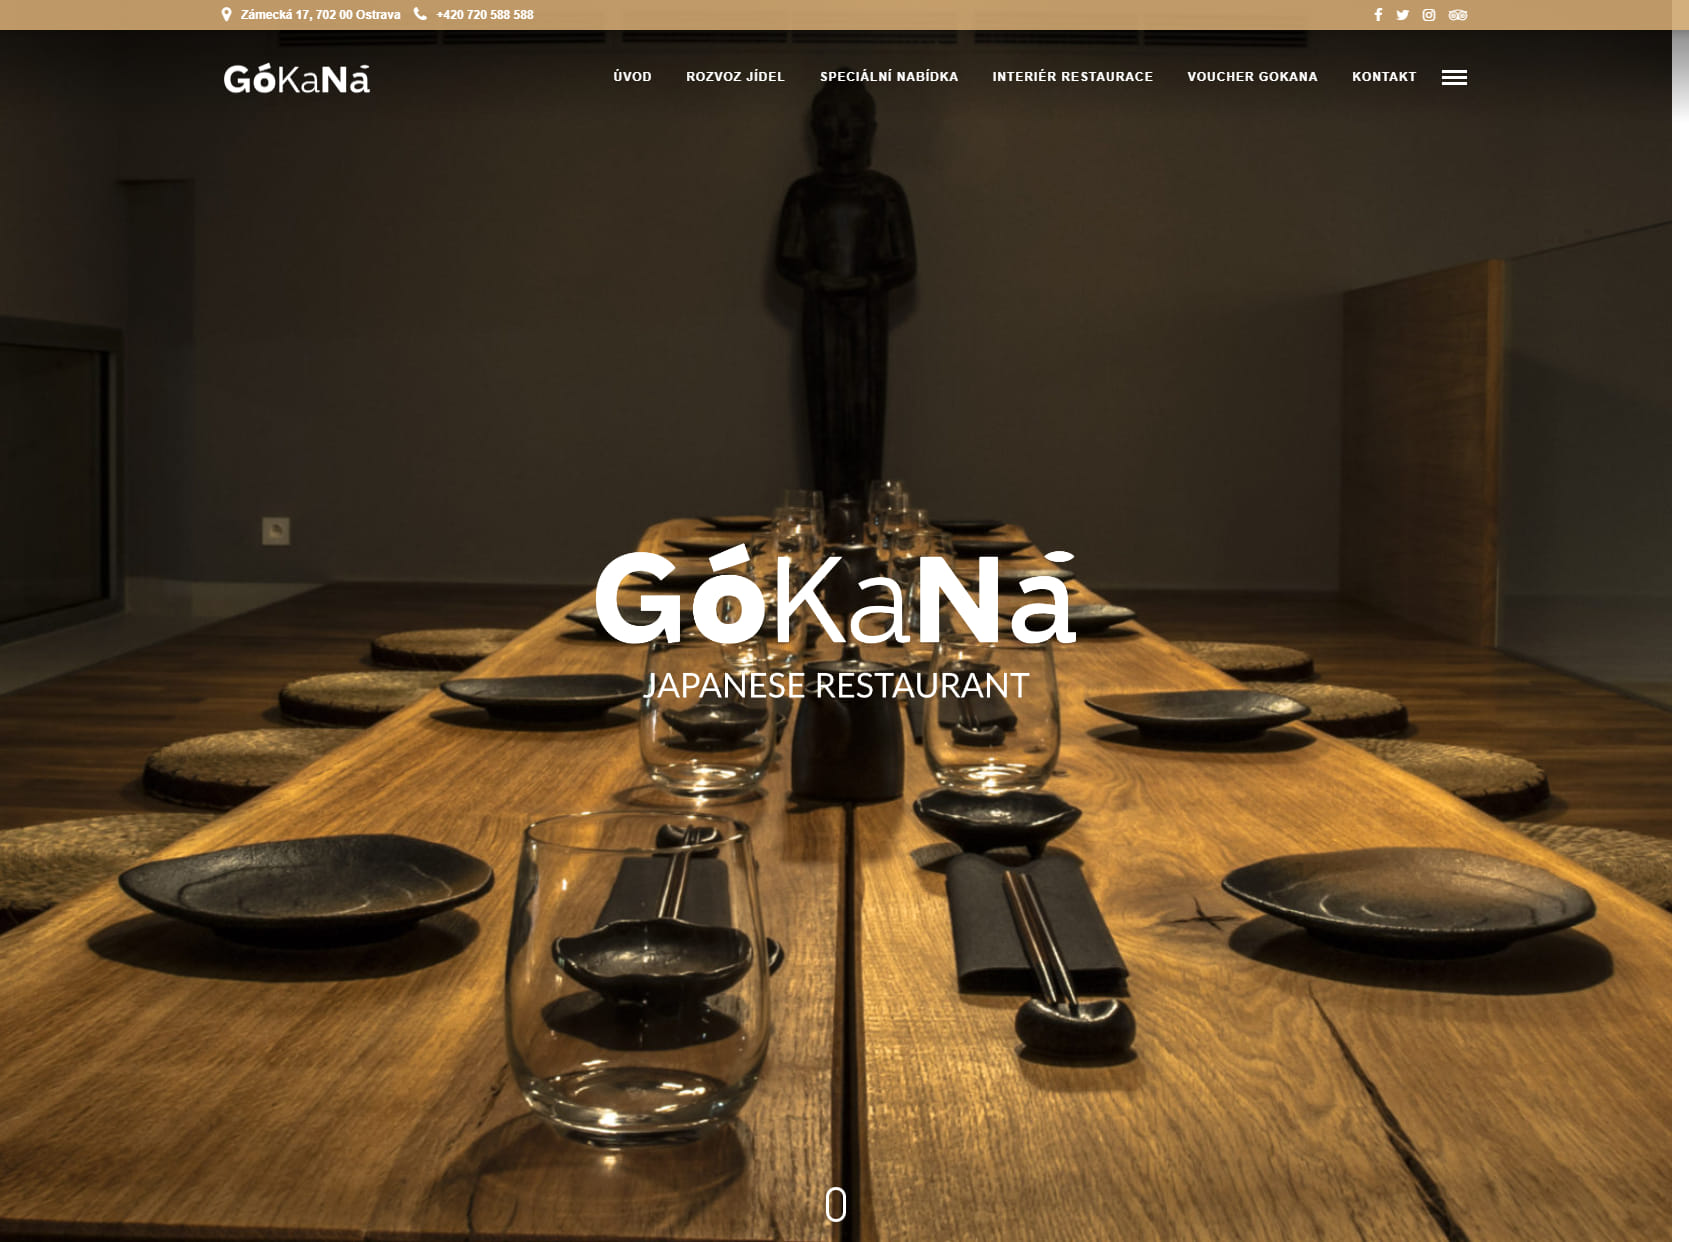 Gokana Japanese restaurant